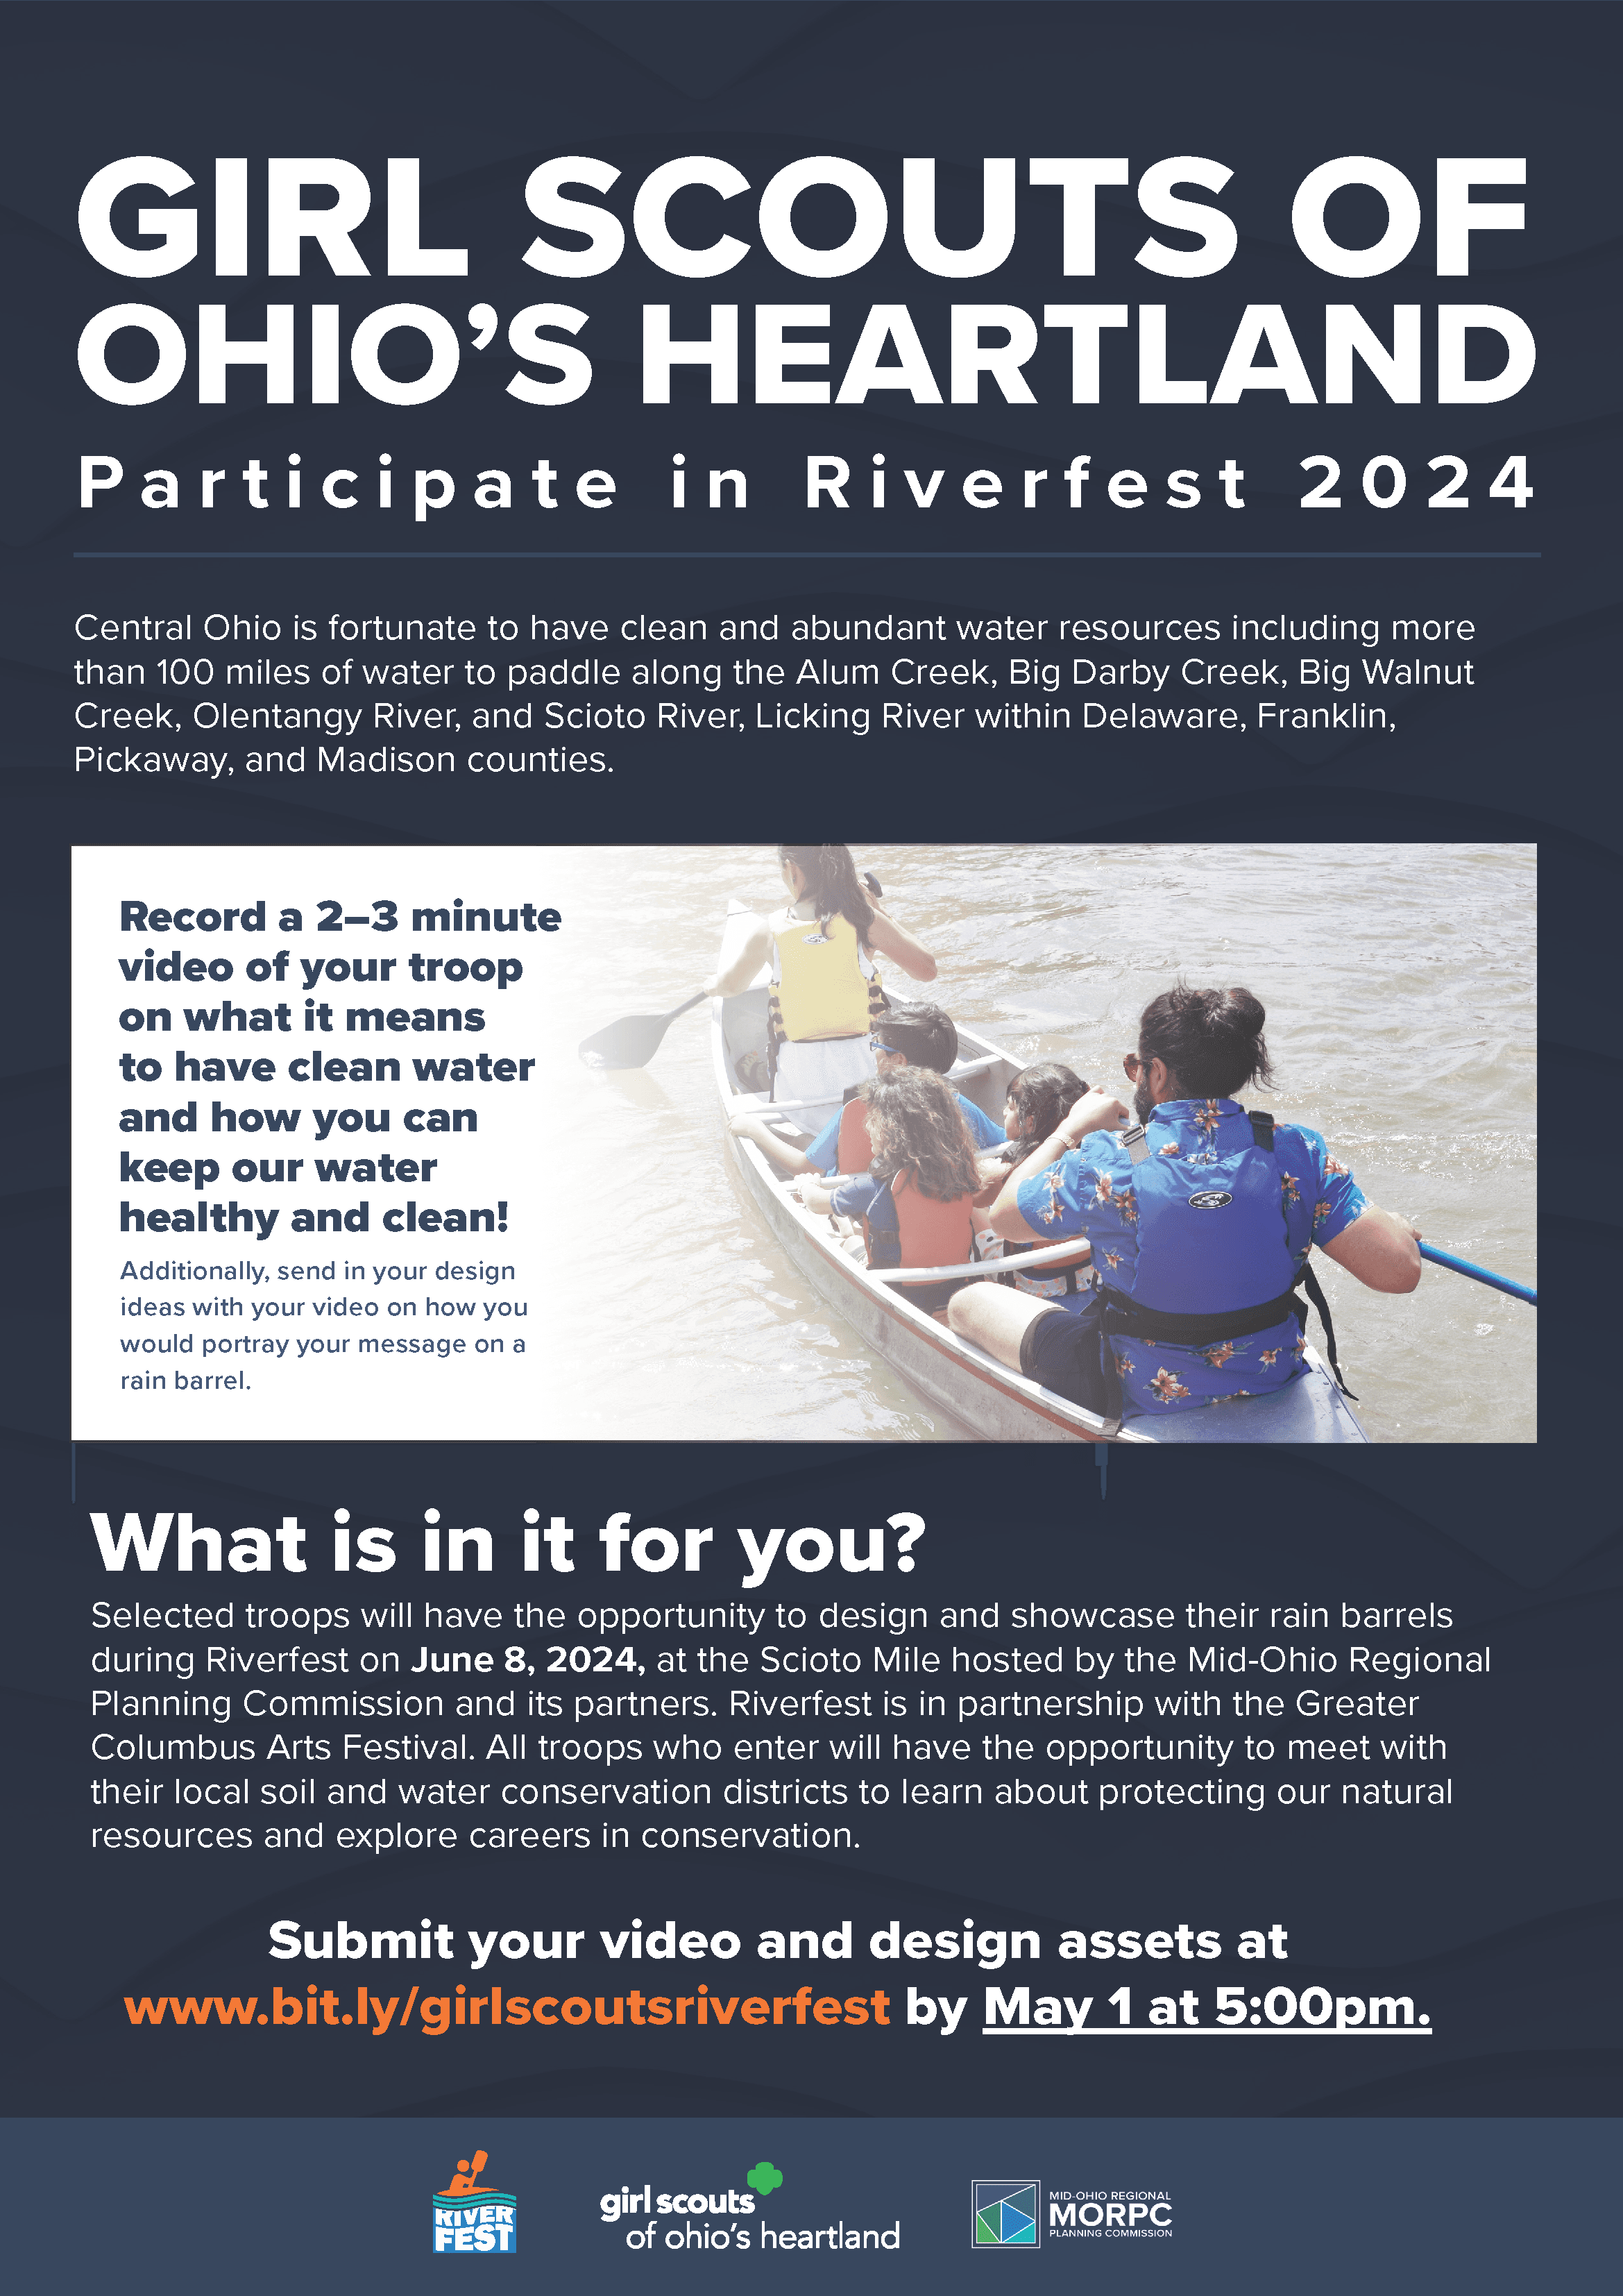 Ohio's Girl Scouts can participate in Riverfest 2024